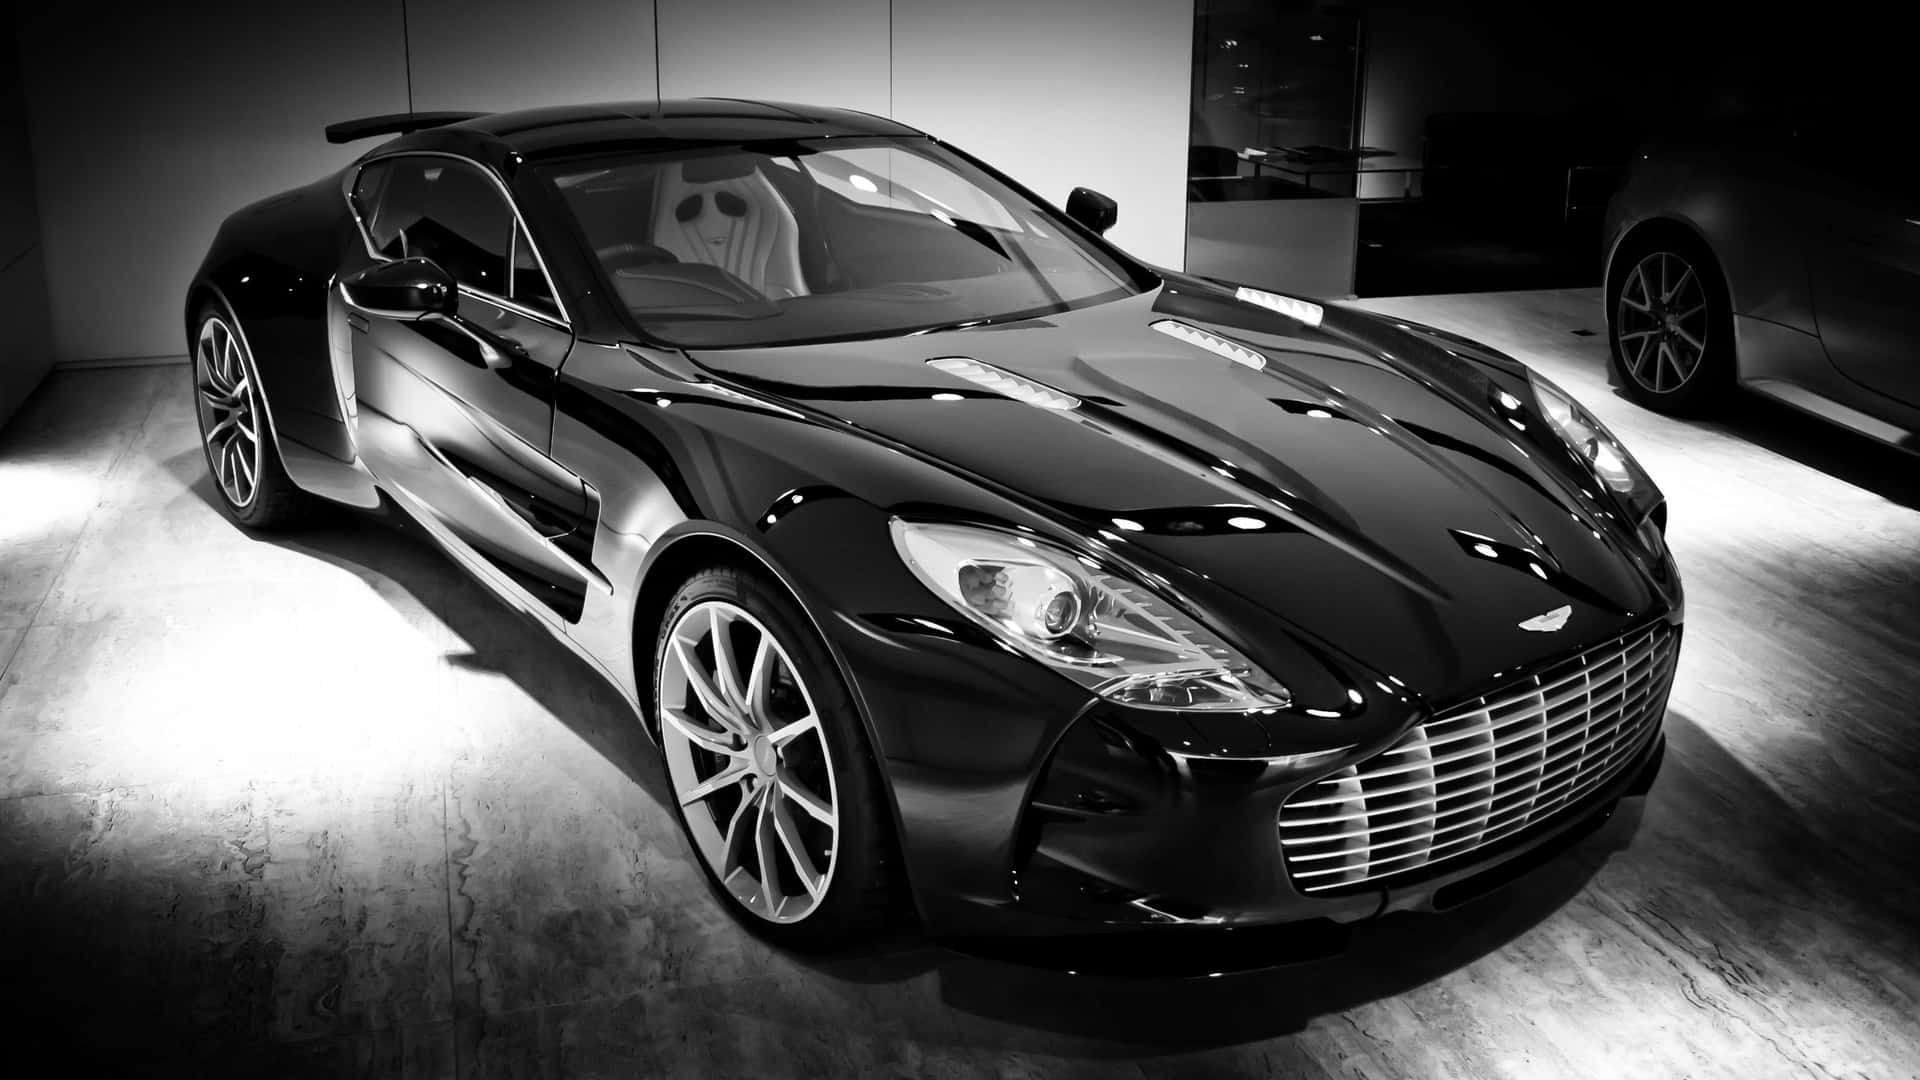 Aston Martin One-77: A Rare&Powerful Supercar Wallpaper